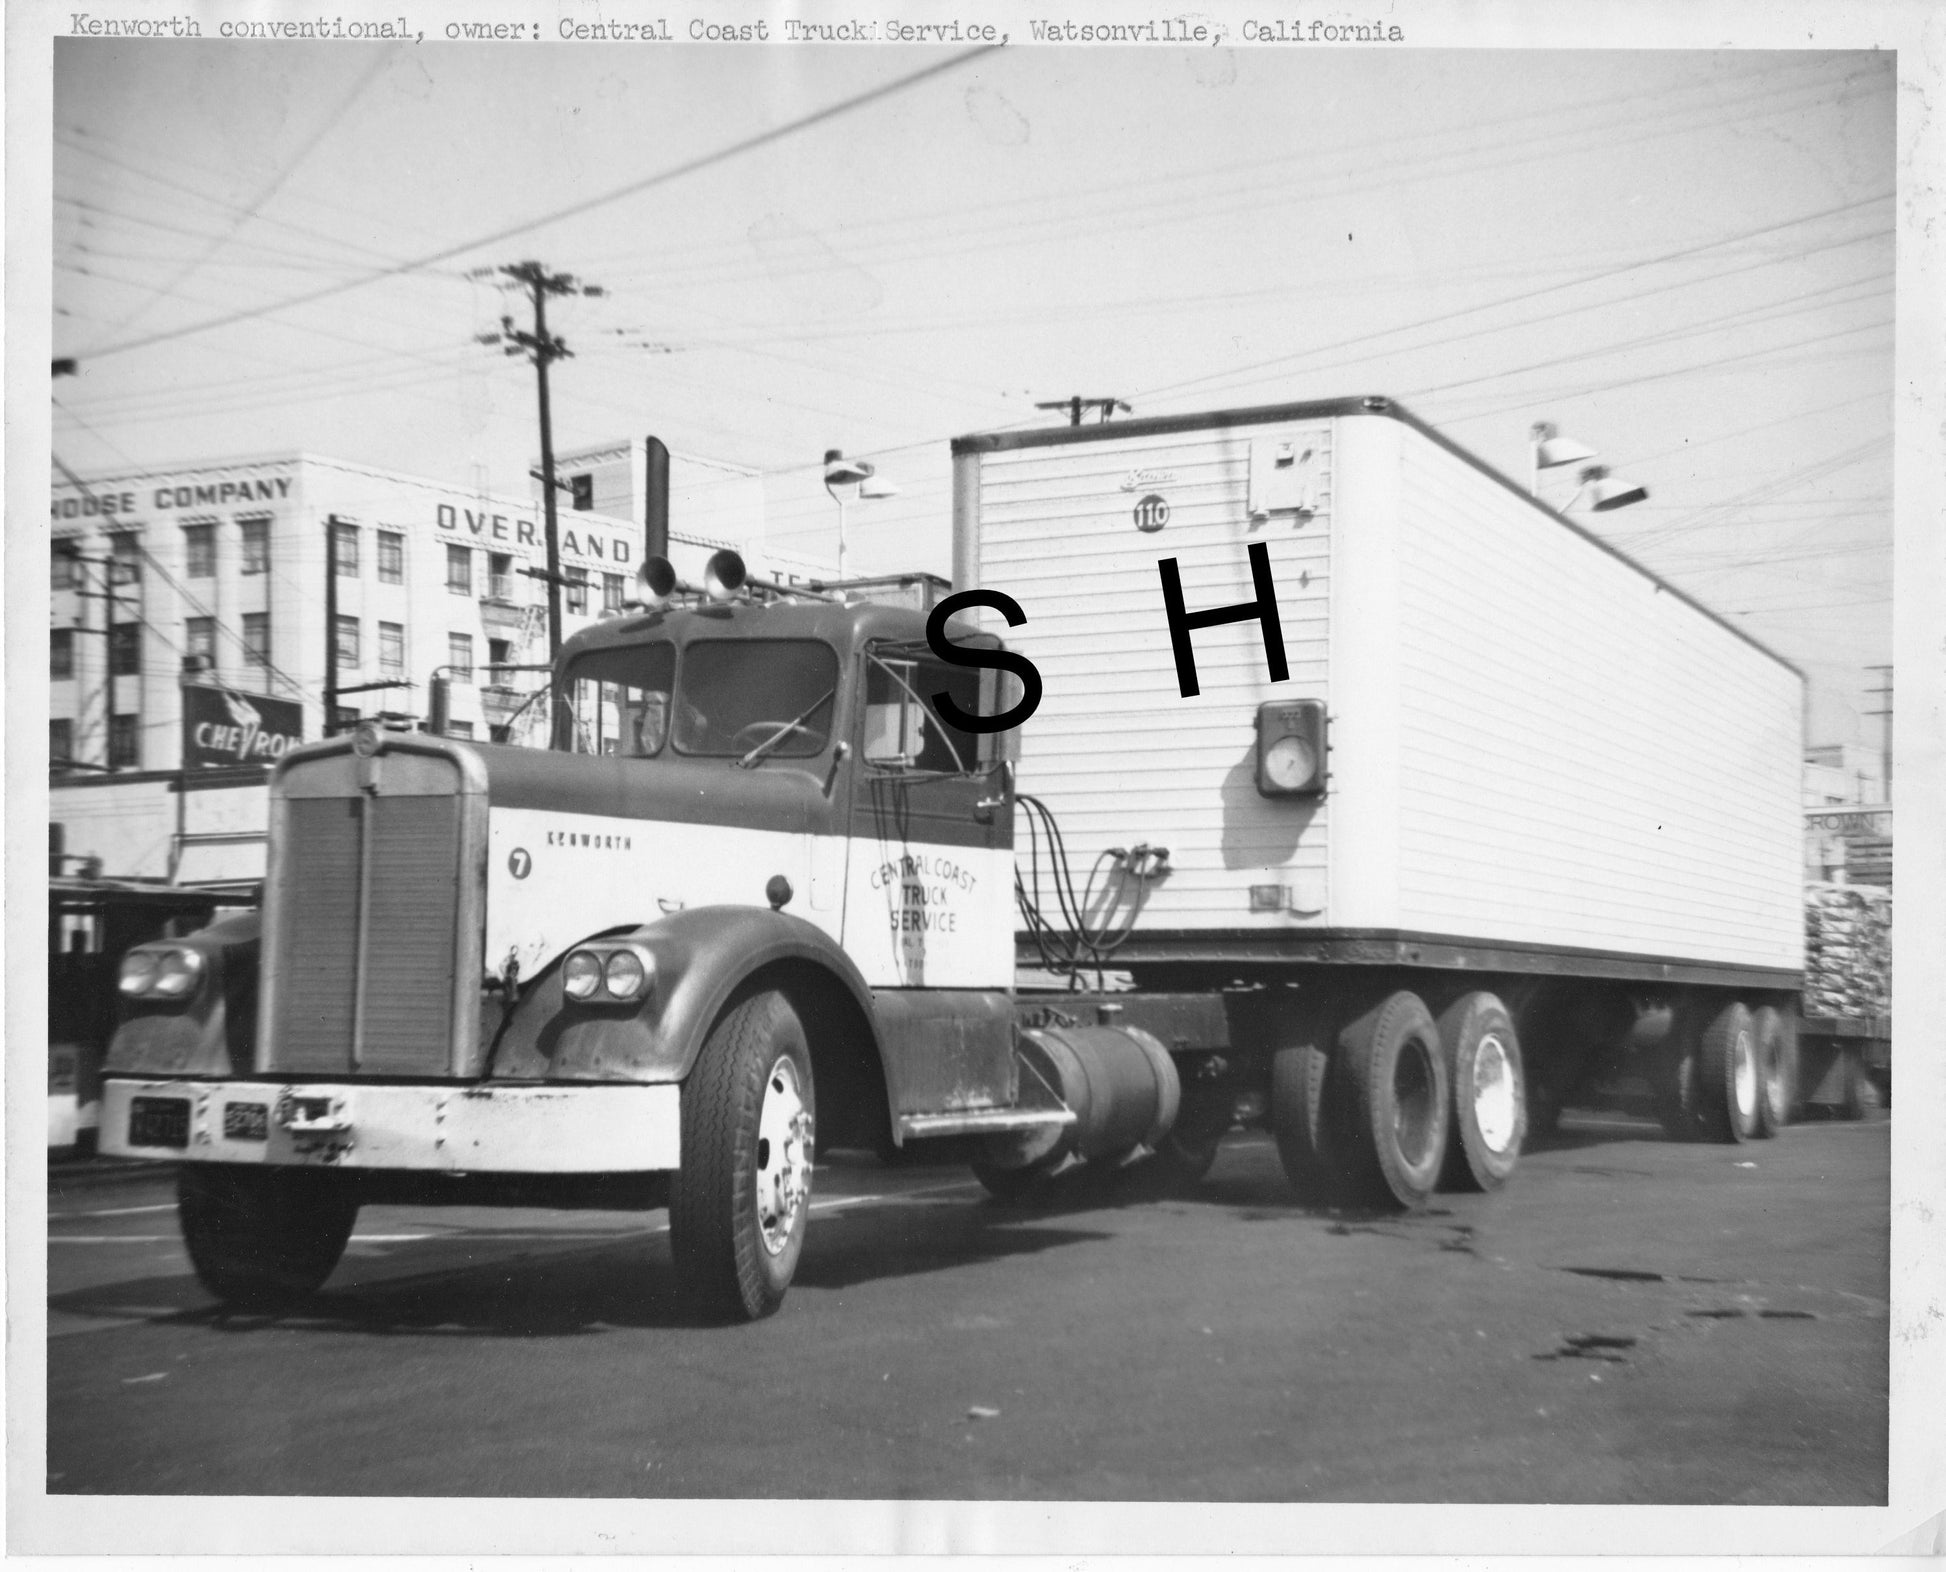 8 X 10 ORIGINAL B & W PHOTO KW CENTRAL COAST TRUCK SERVICE - Transportation Treasures